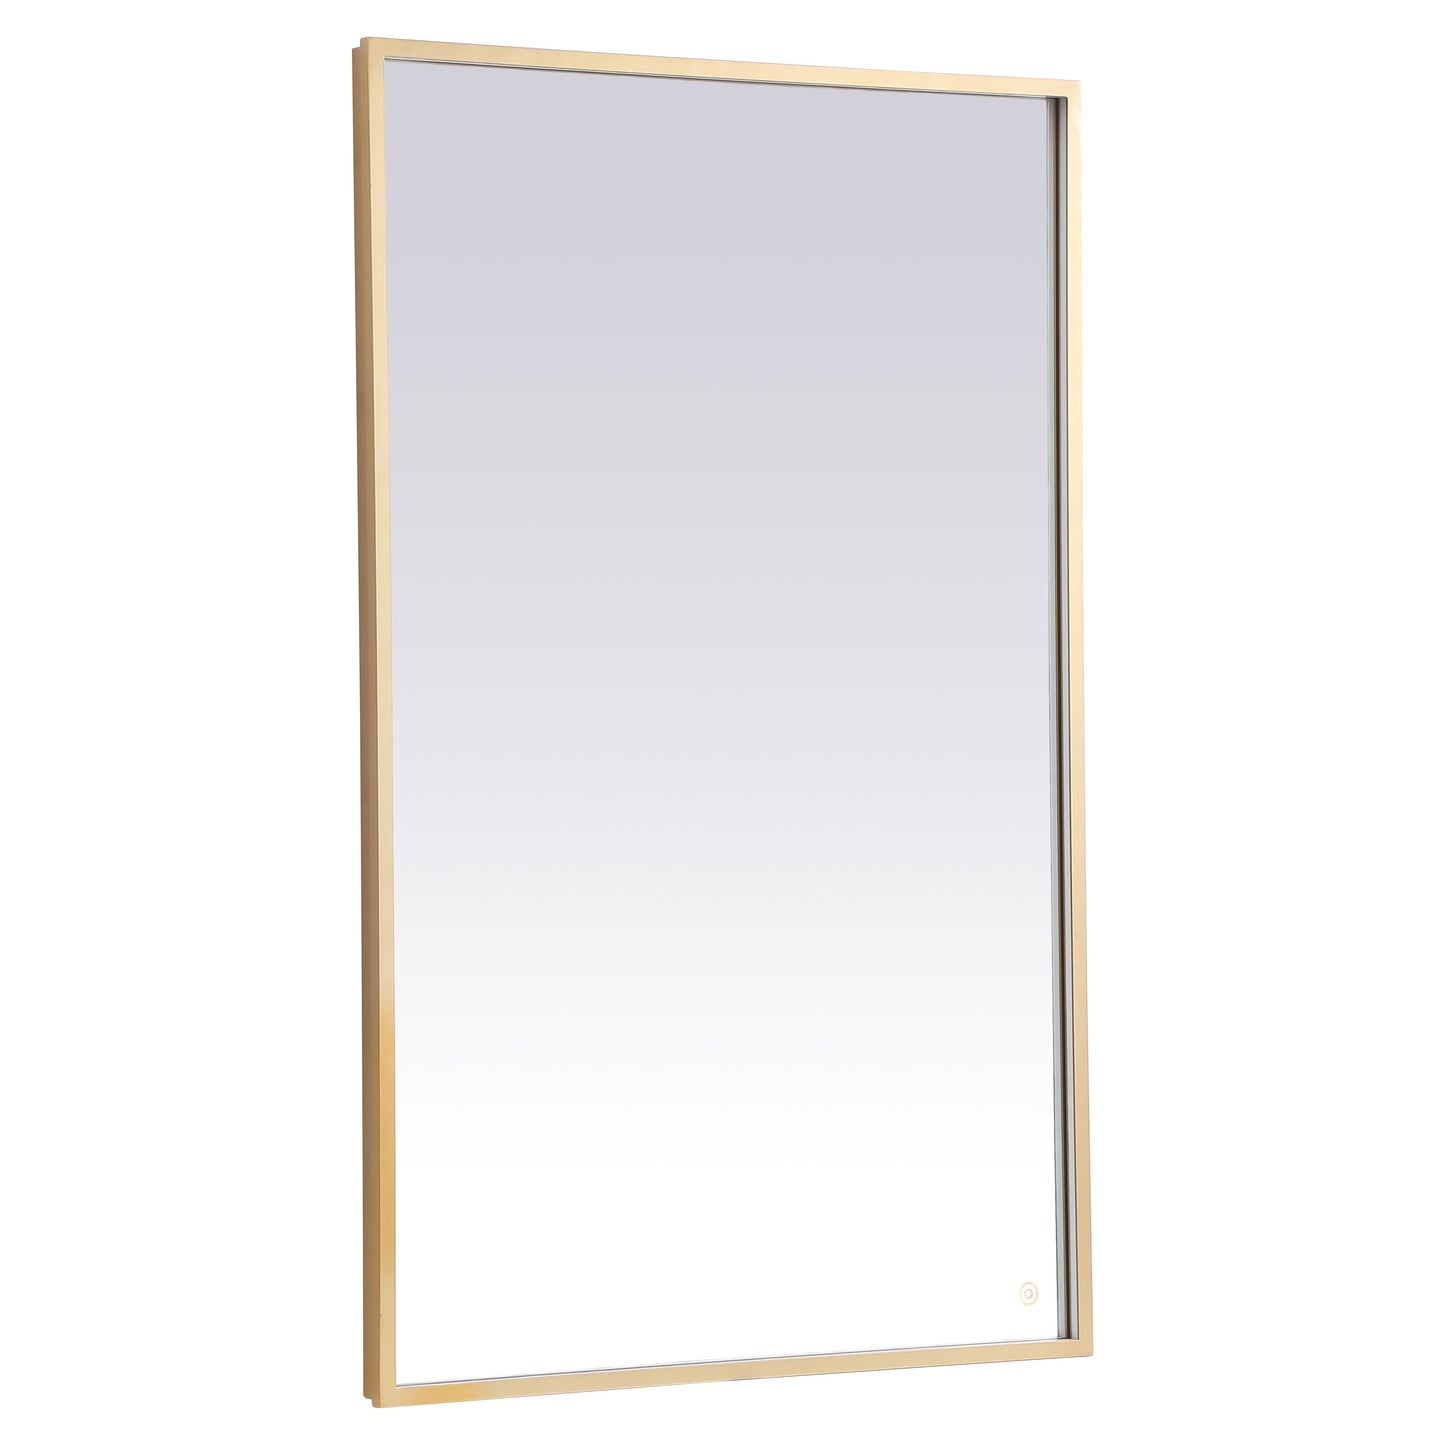 MRE63048BR Pier 48" x 30" LED Mirror in Brass - Adjustable Color Temp